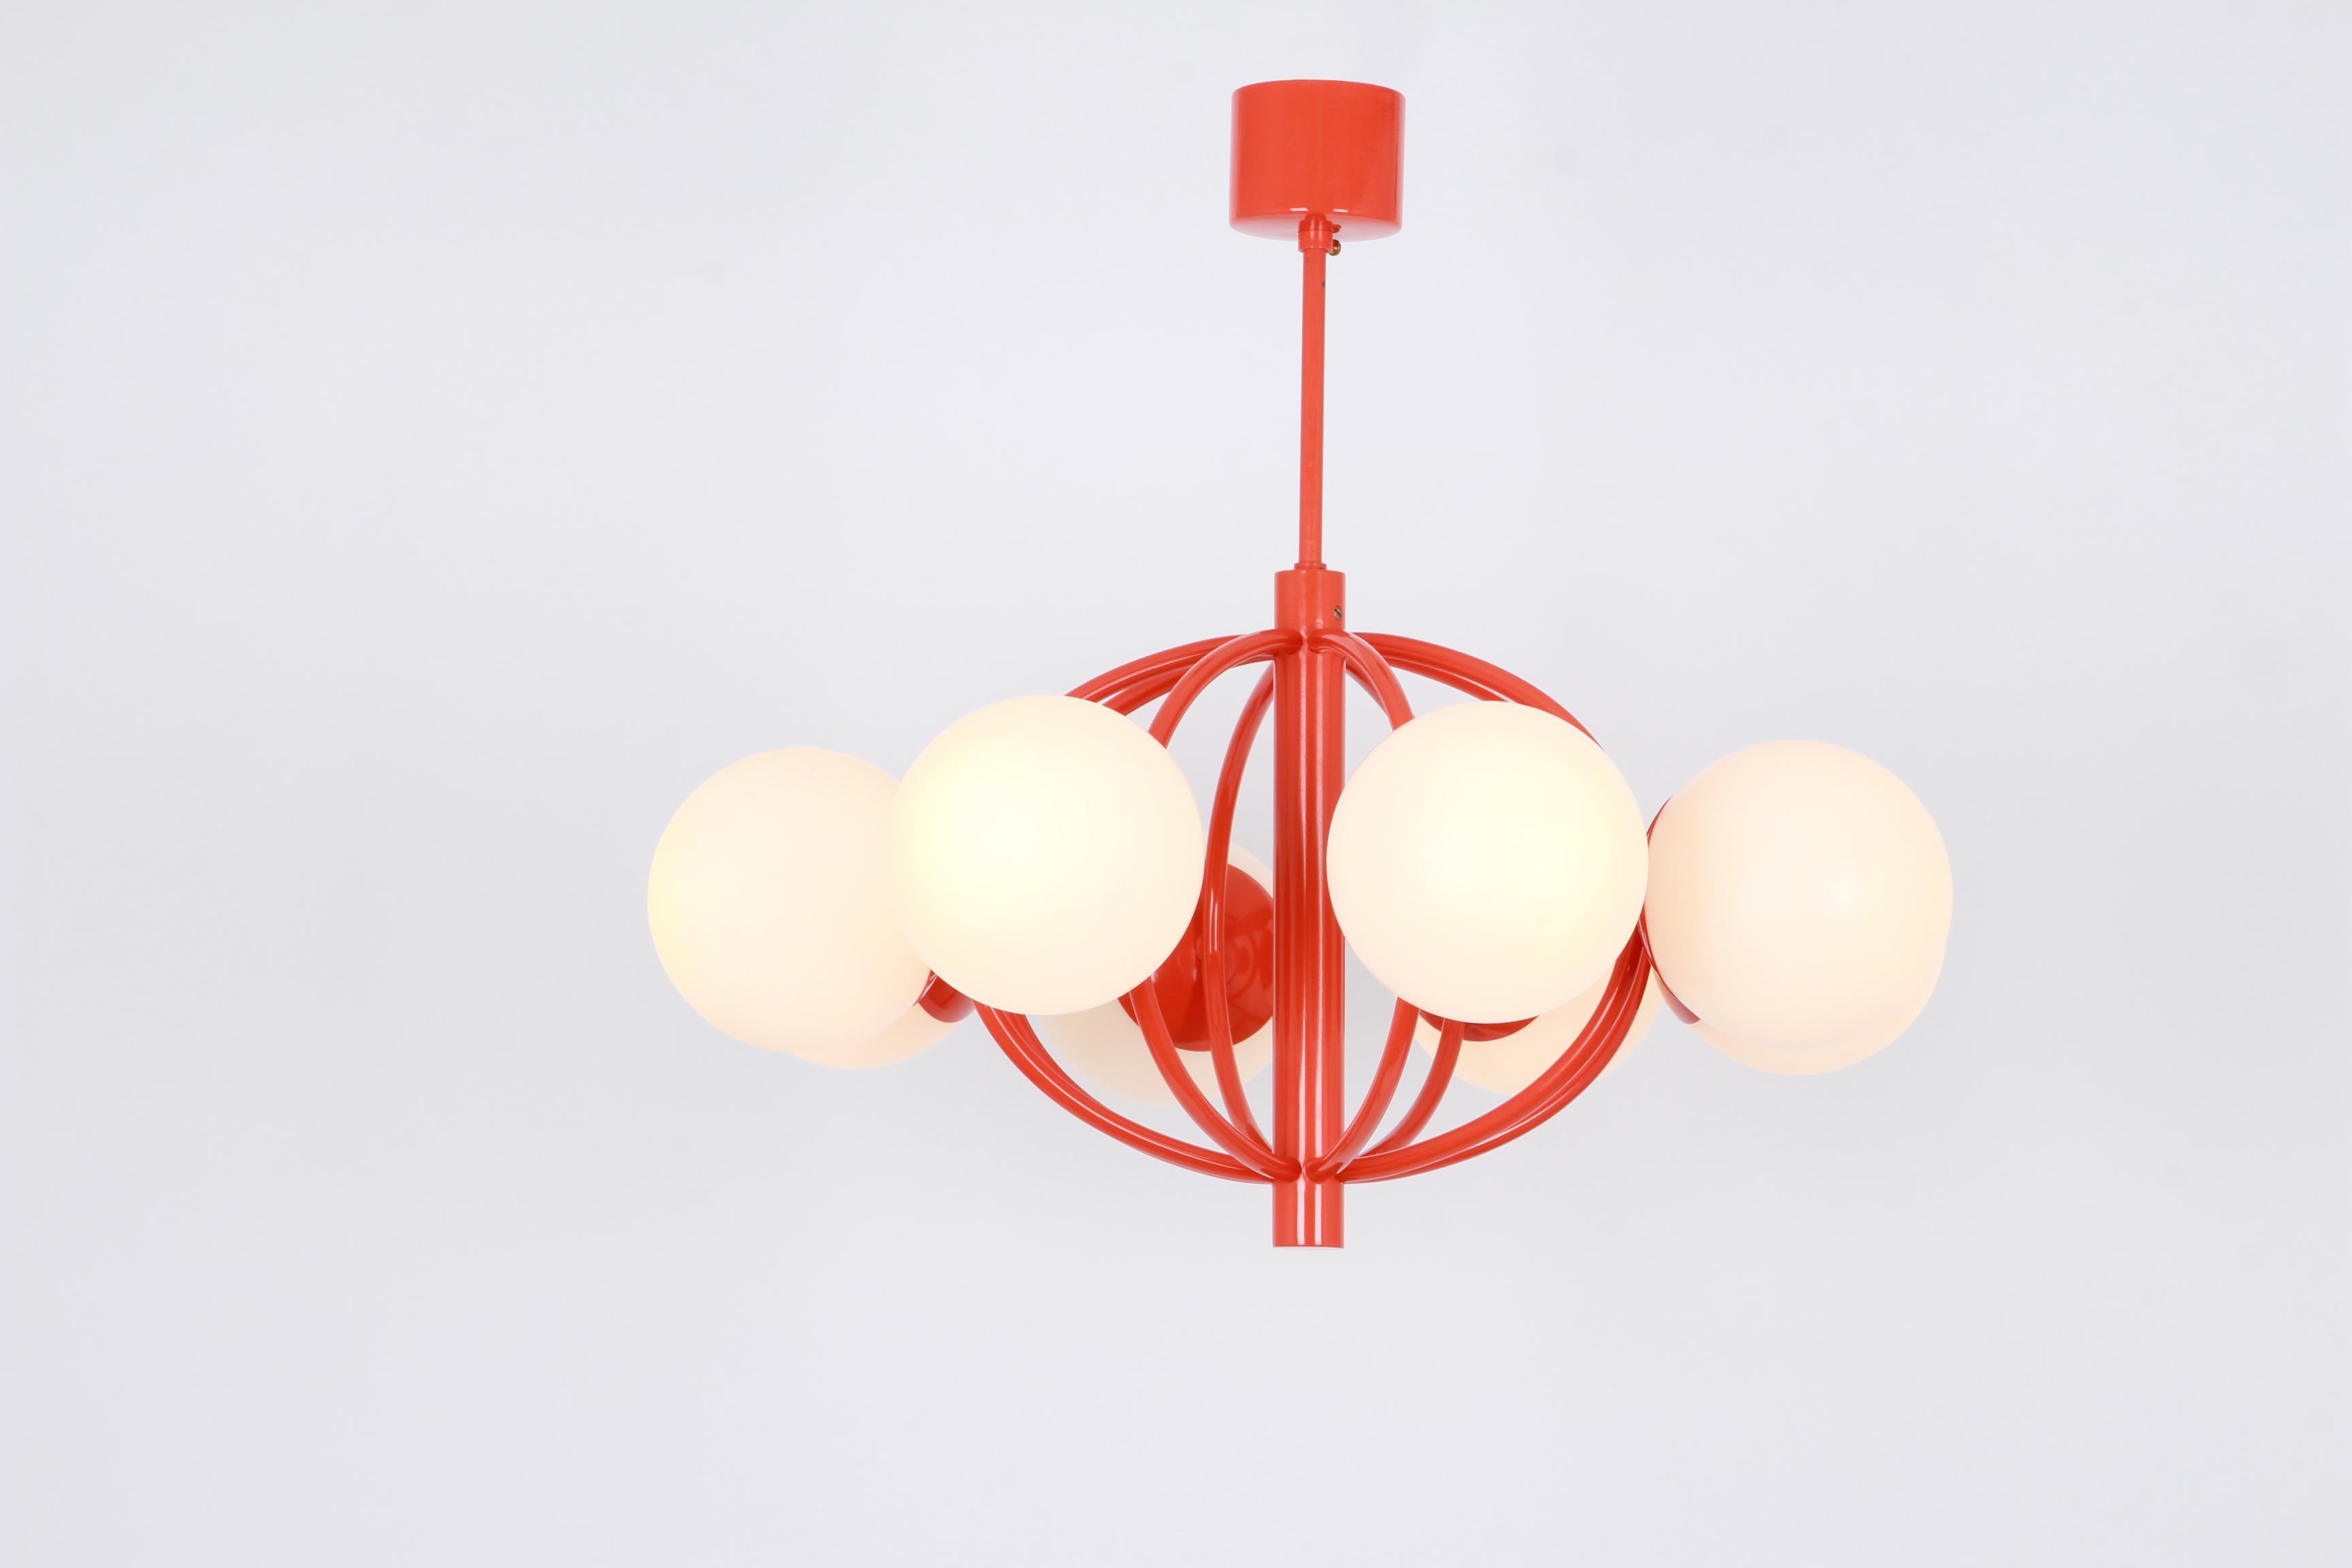 Mid-Century Modern Midcentury Orbital Ceiling Lamp Pendant in Orange by Kaiser, Germany, 1960s For Sale